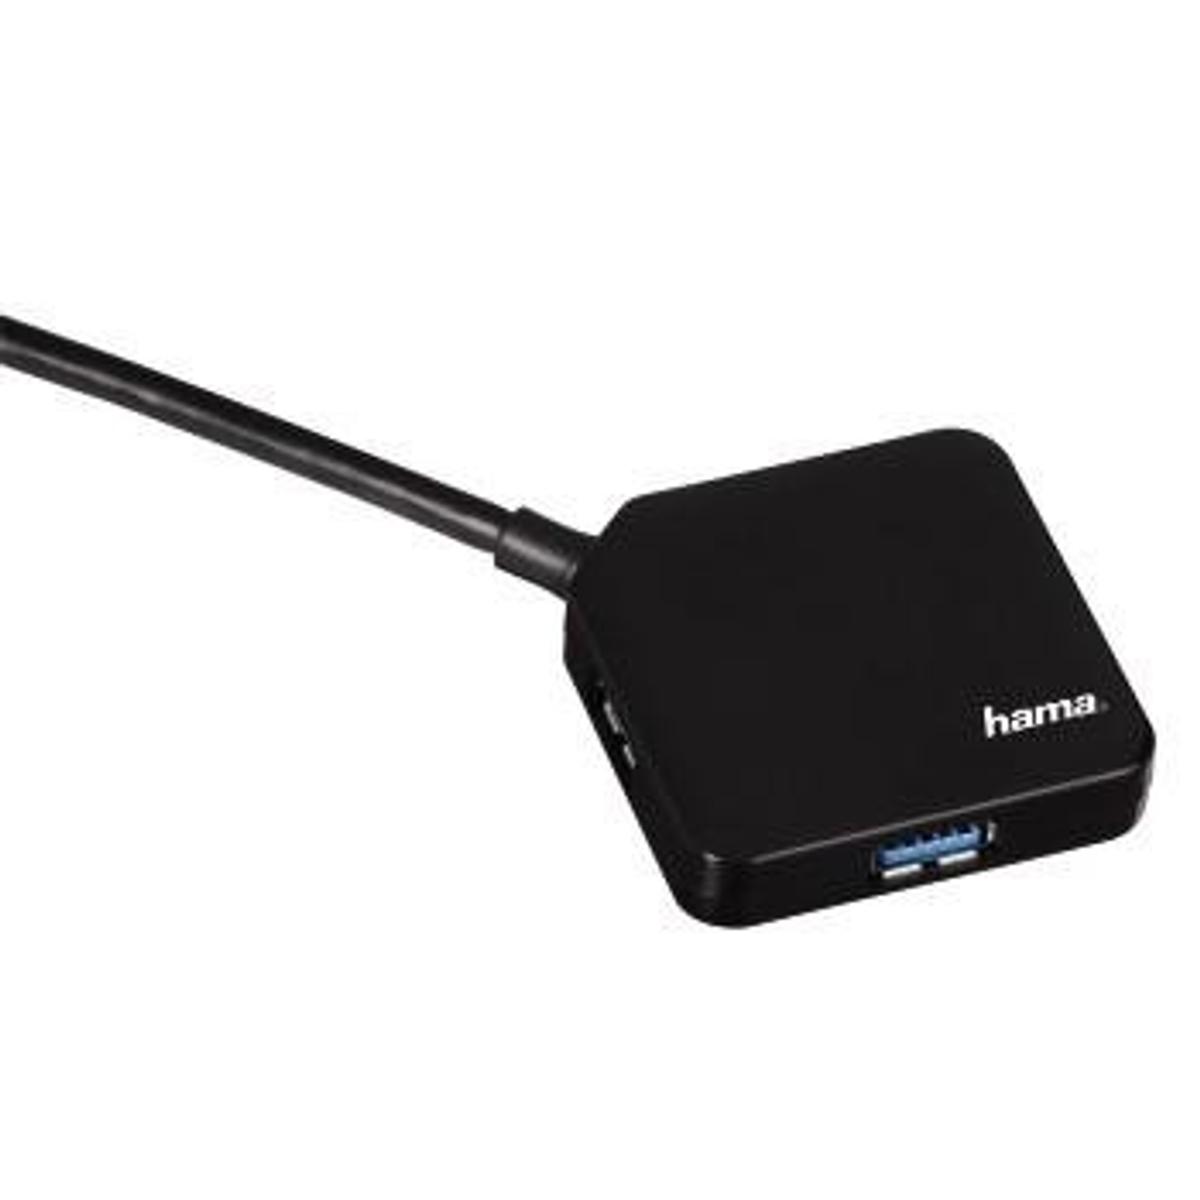 HAMA 012190 USB USB-3.0-Hub, Schwarz 4 3.0 FACH, 1x HUB